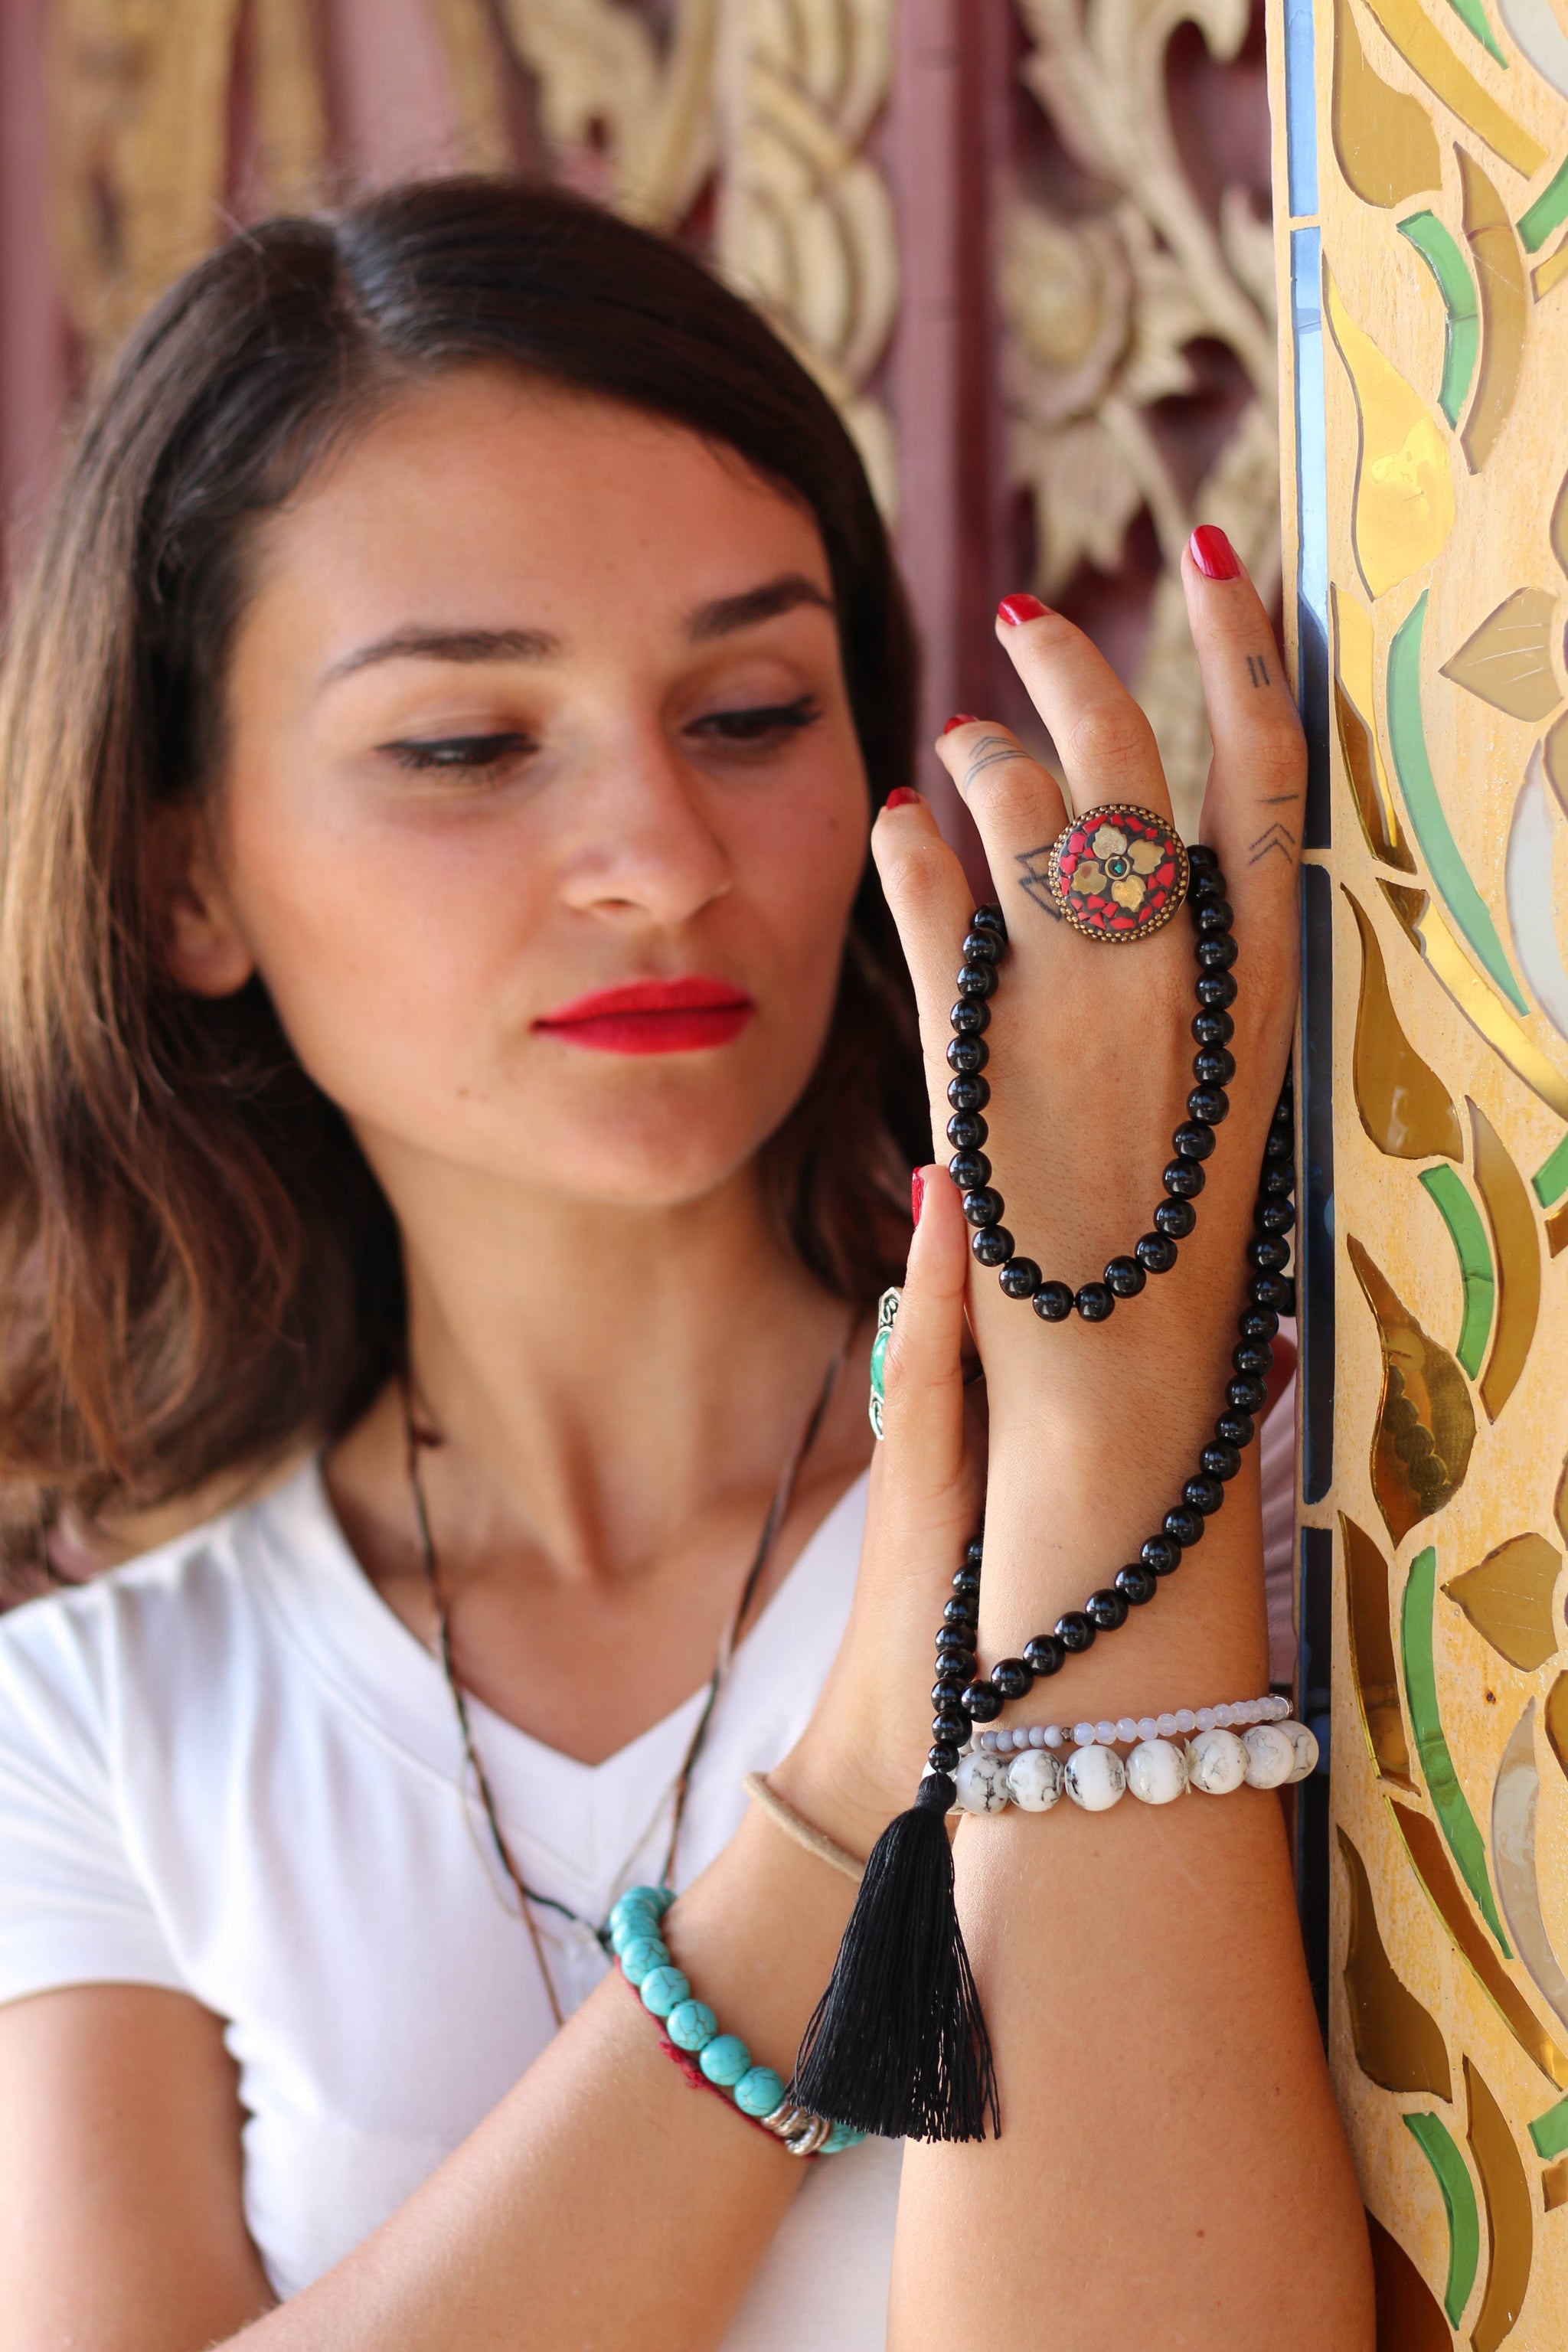 Black Onyx Buddhist Mala Beads Necklace with Black Tassels - One